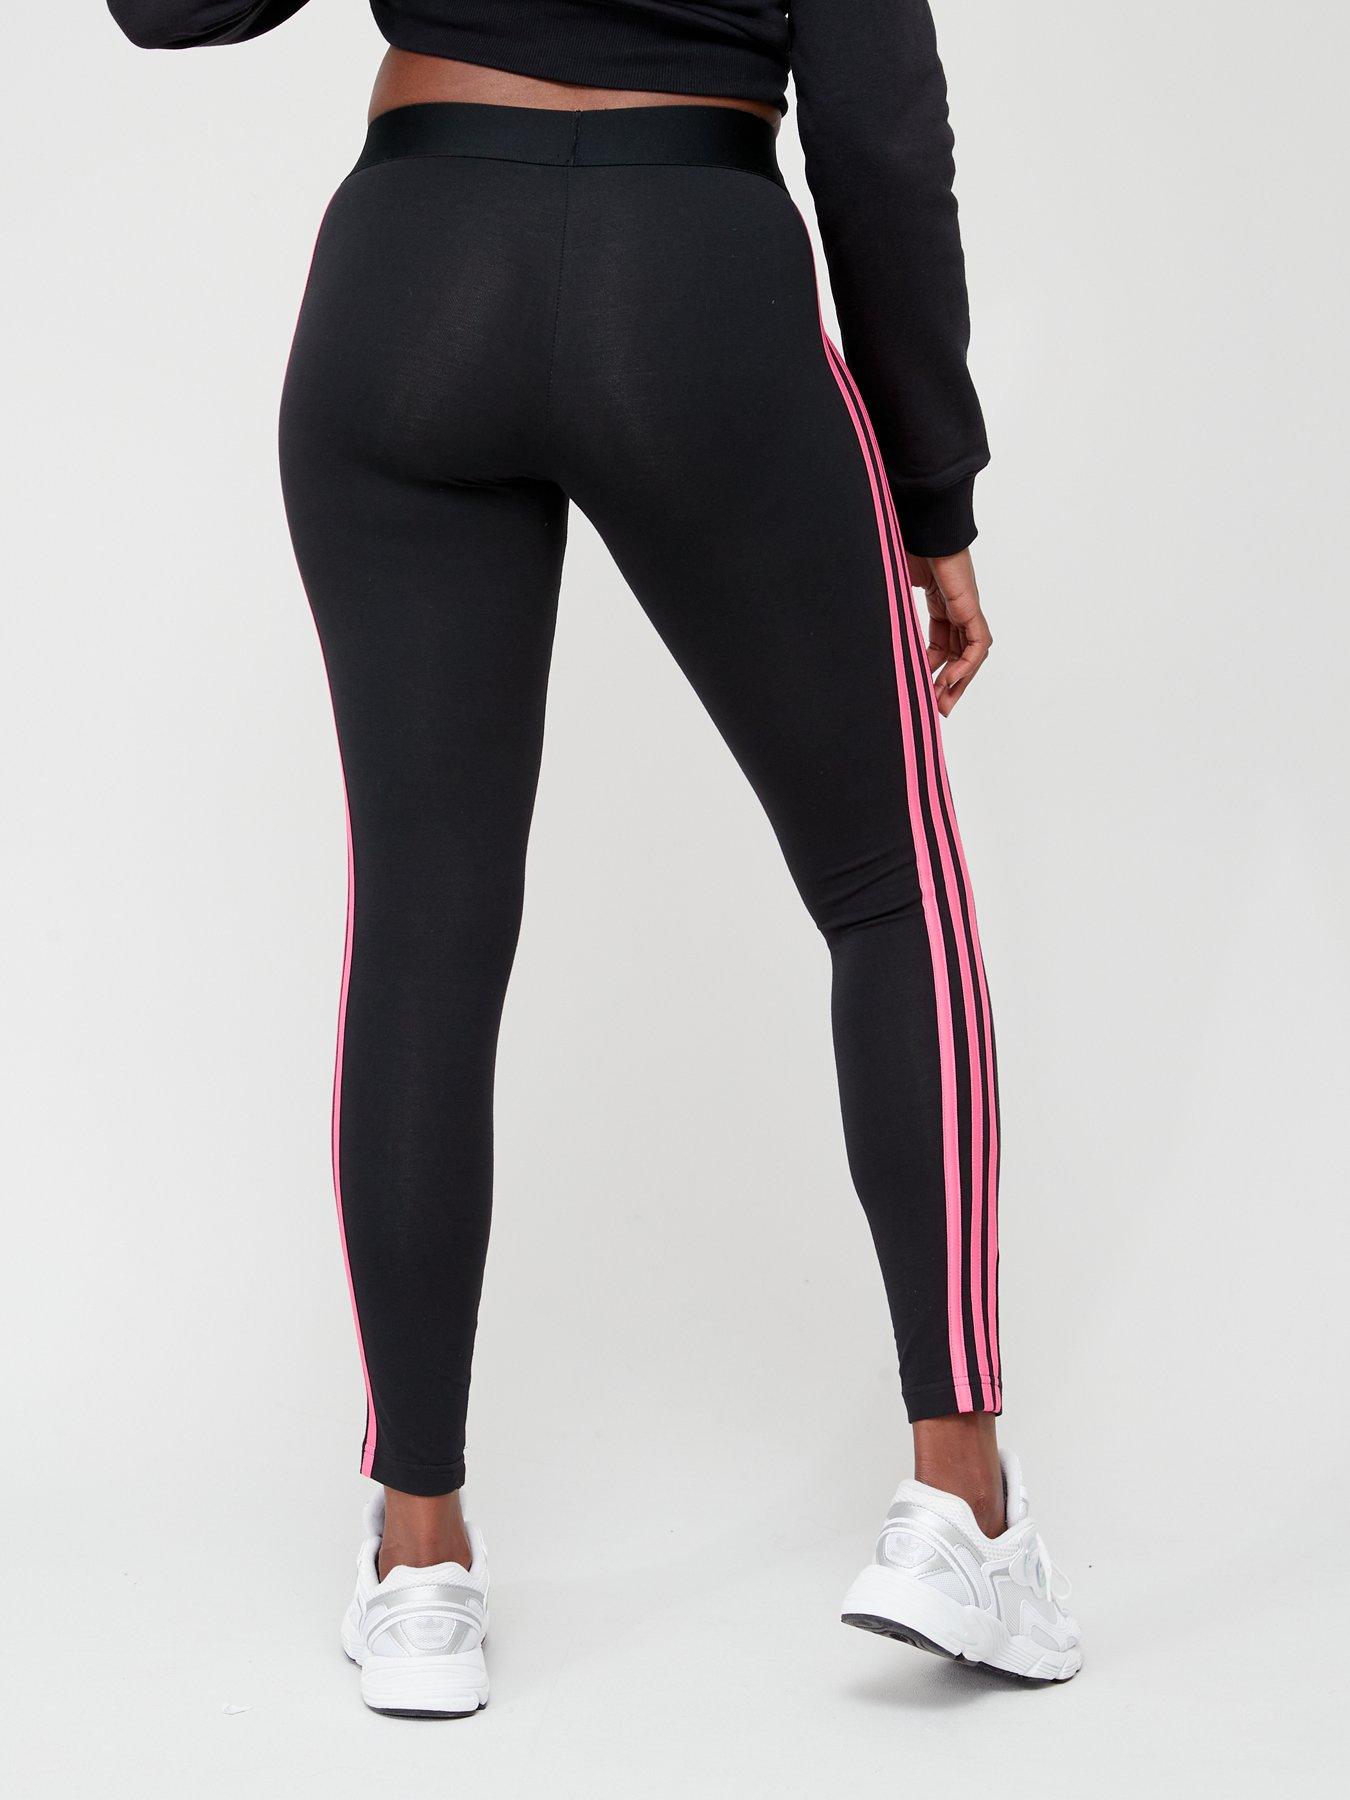 Adidas Adidas Leggings Small 8-10 Black Pink Running Jogging Gym